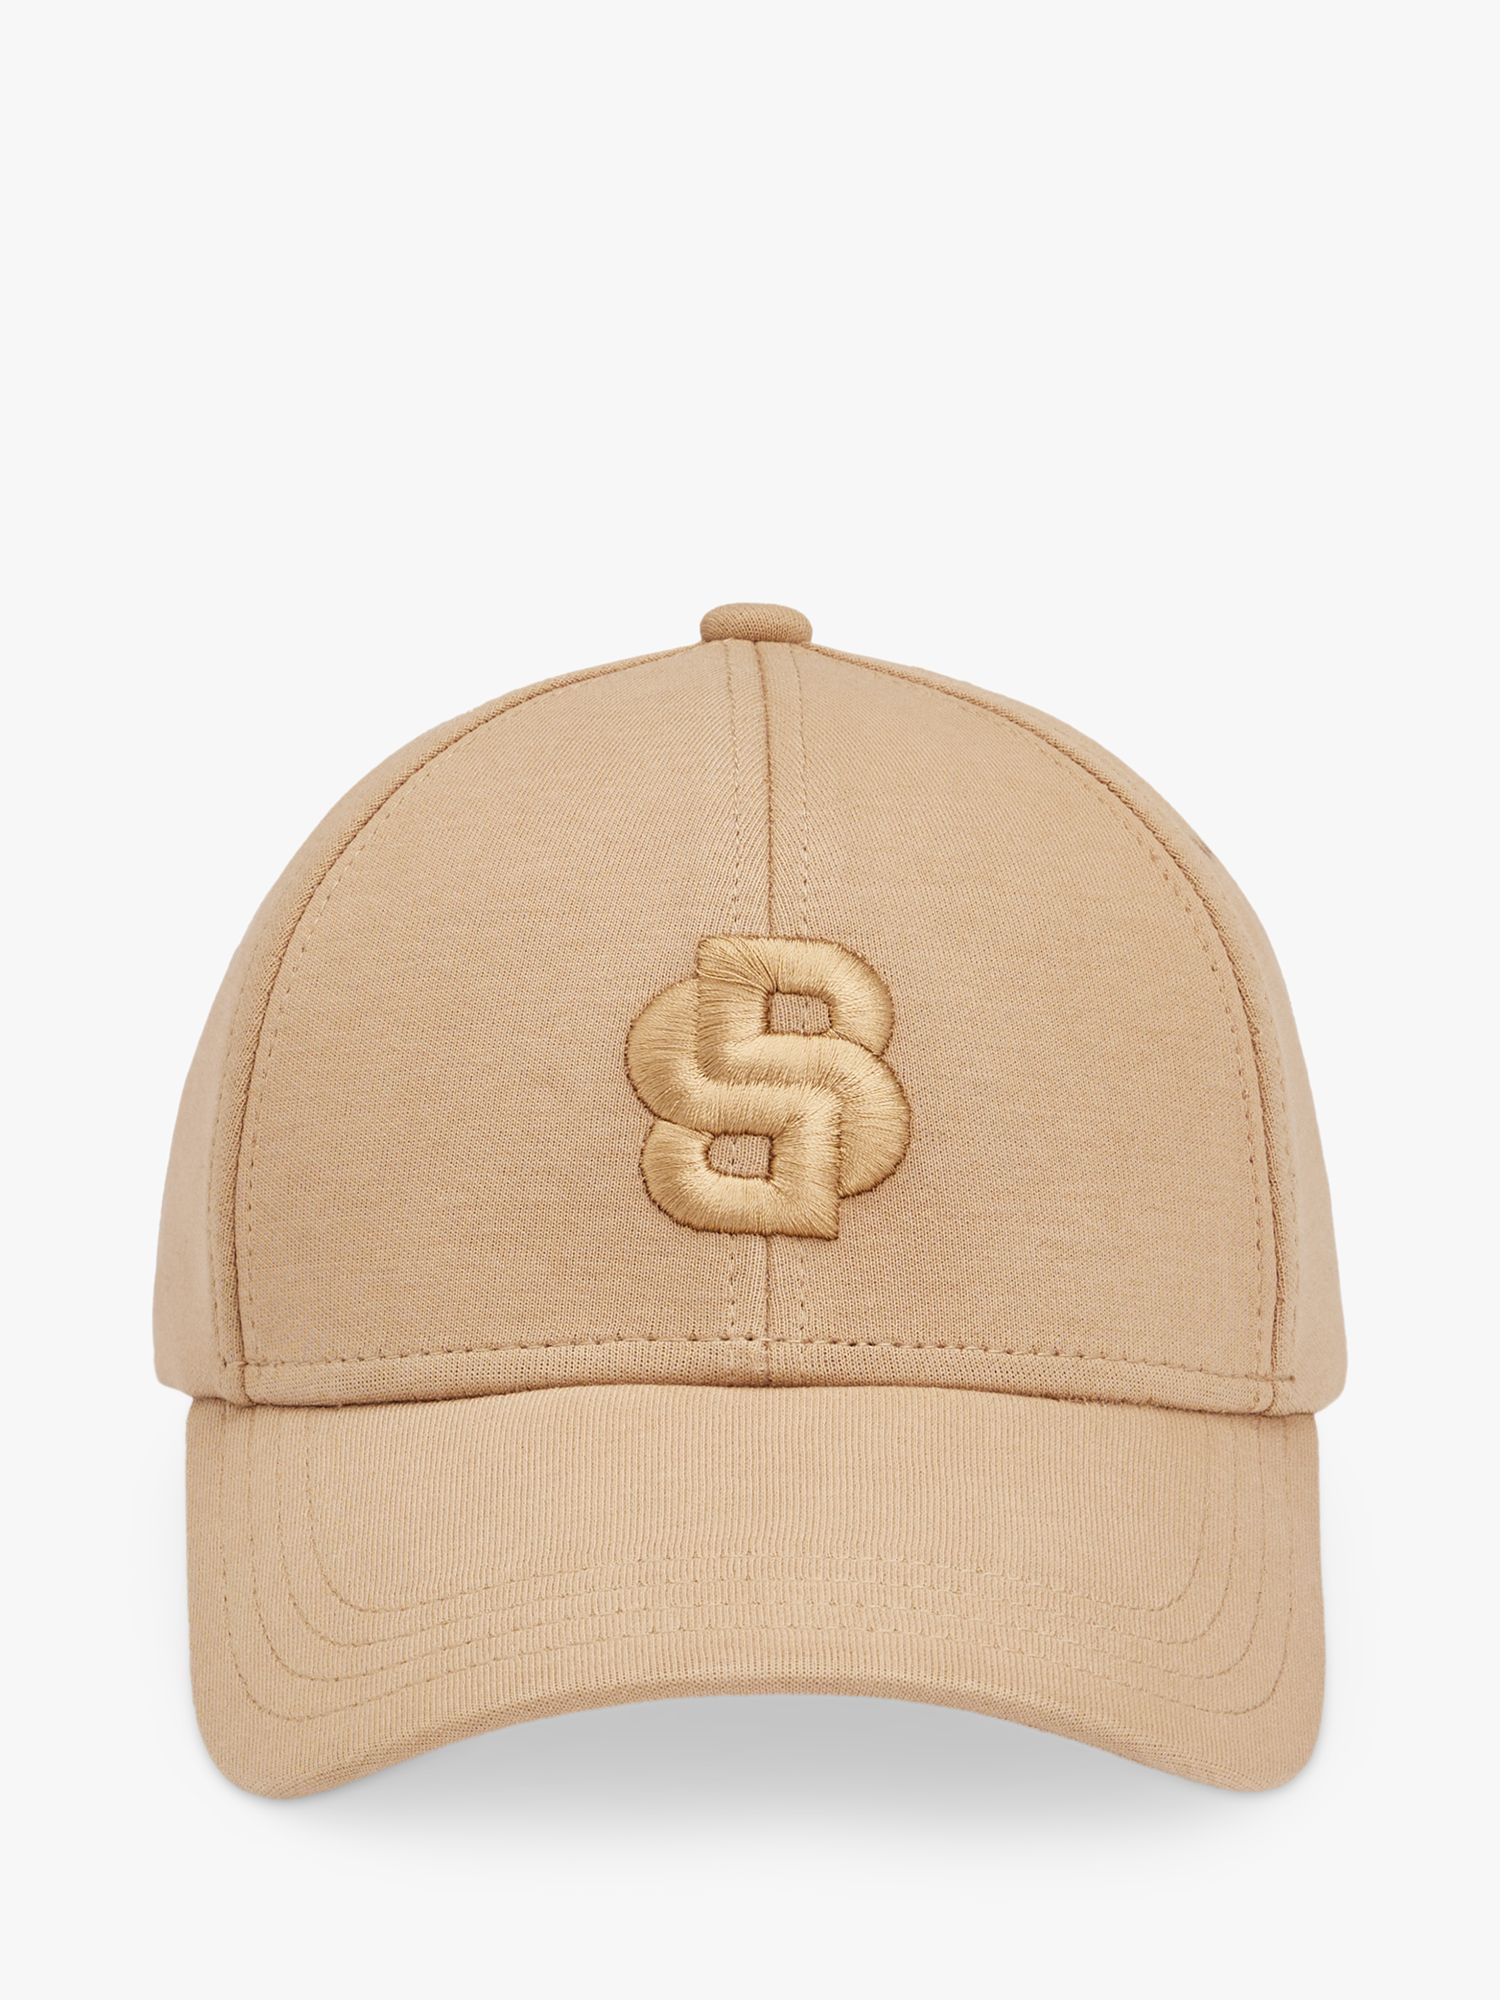 BOSS Zed Iconic Baseball Cap, Beige, One Size